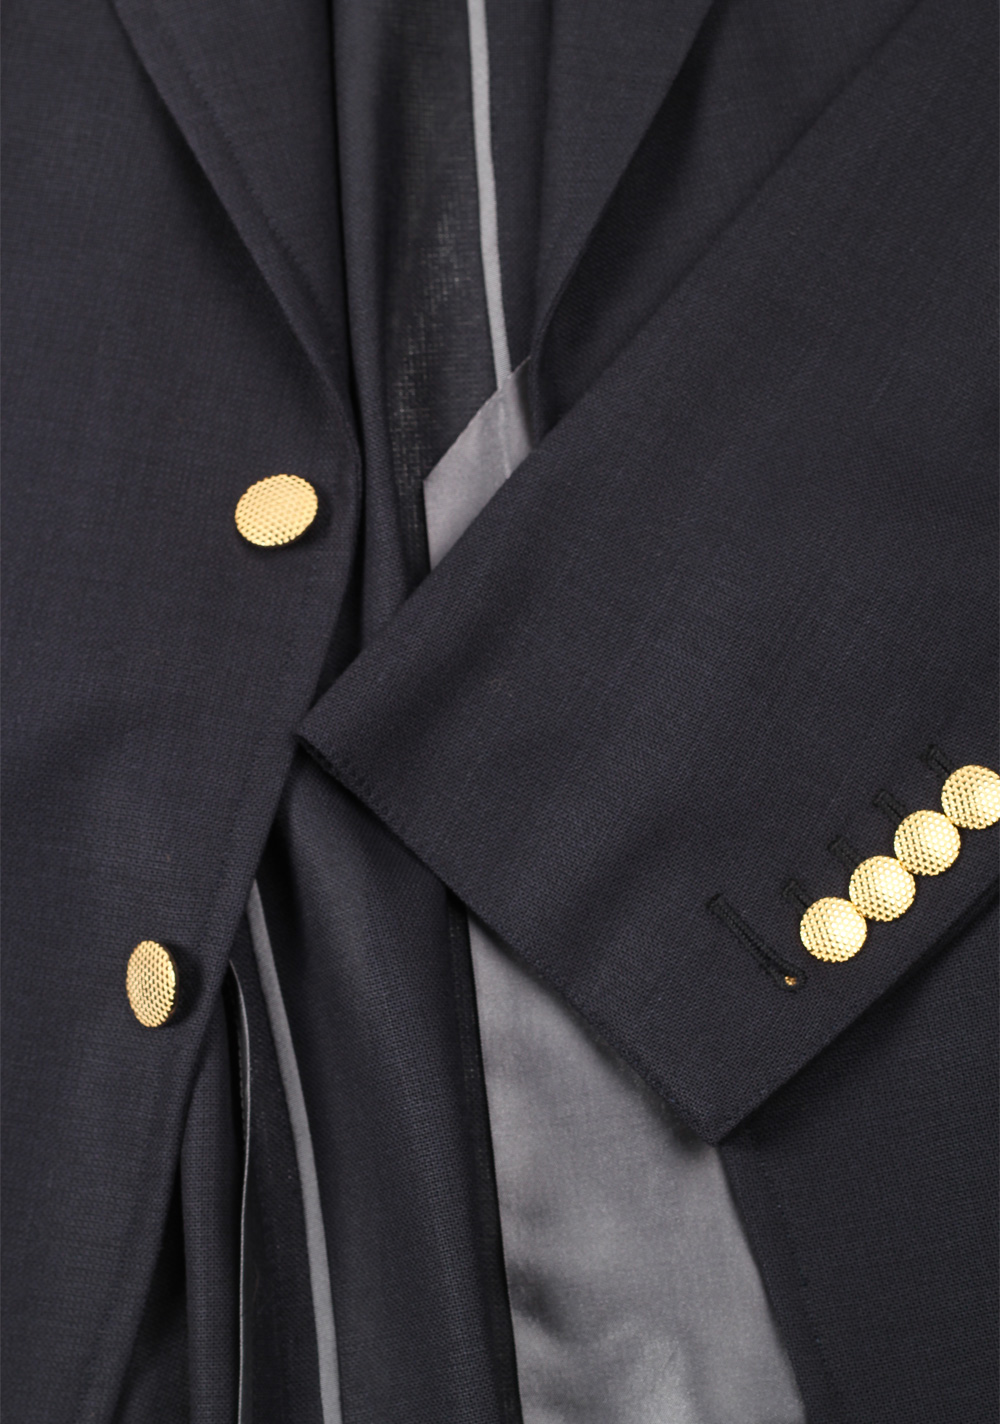 TOM FORD Spencer Blue Blazer Sport Coat Size 48 / 38R U.S. | Costume Limité